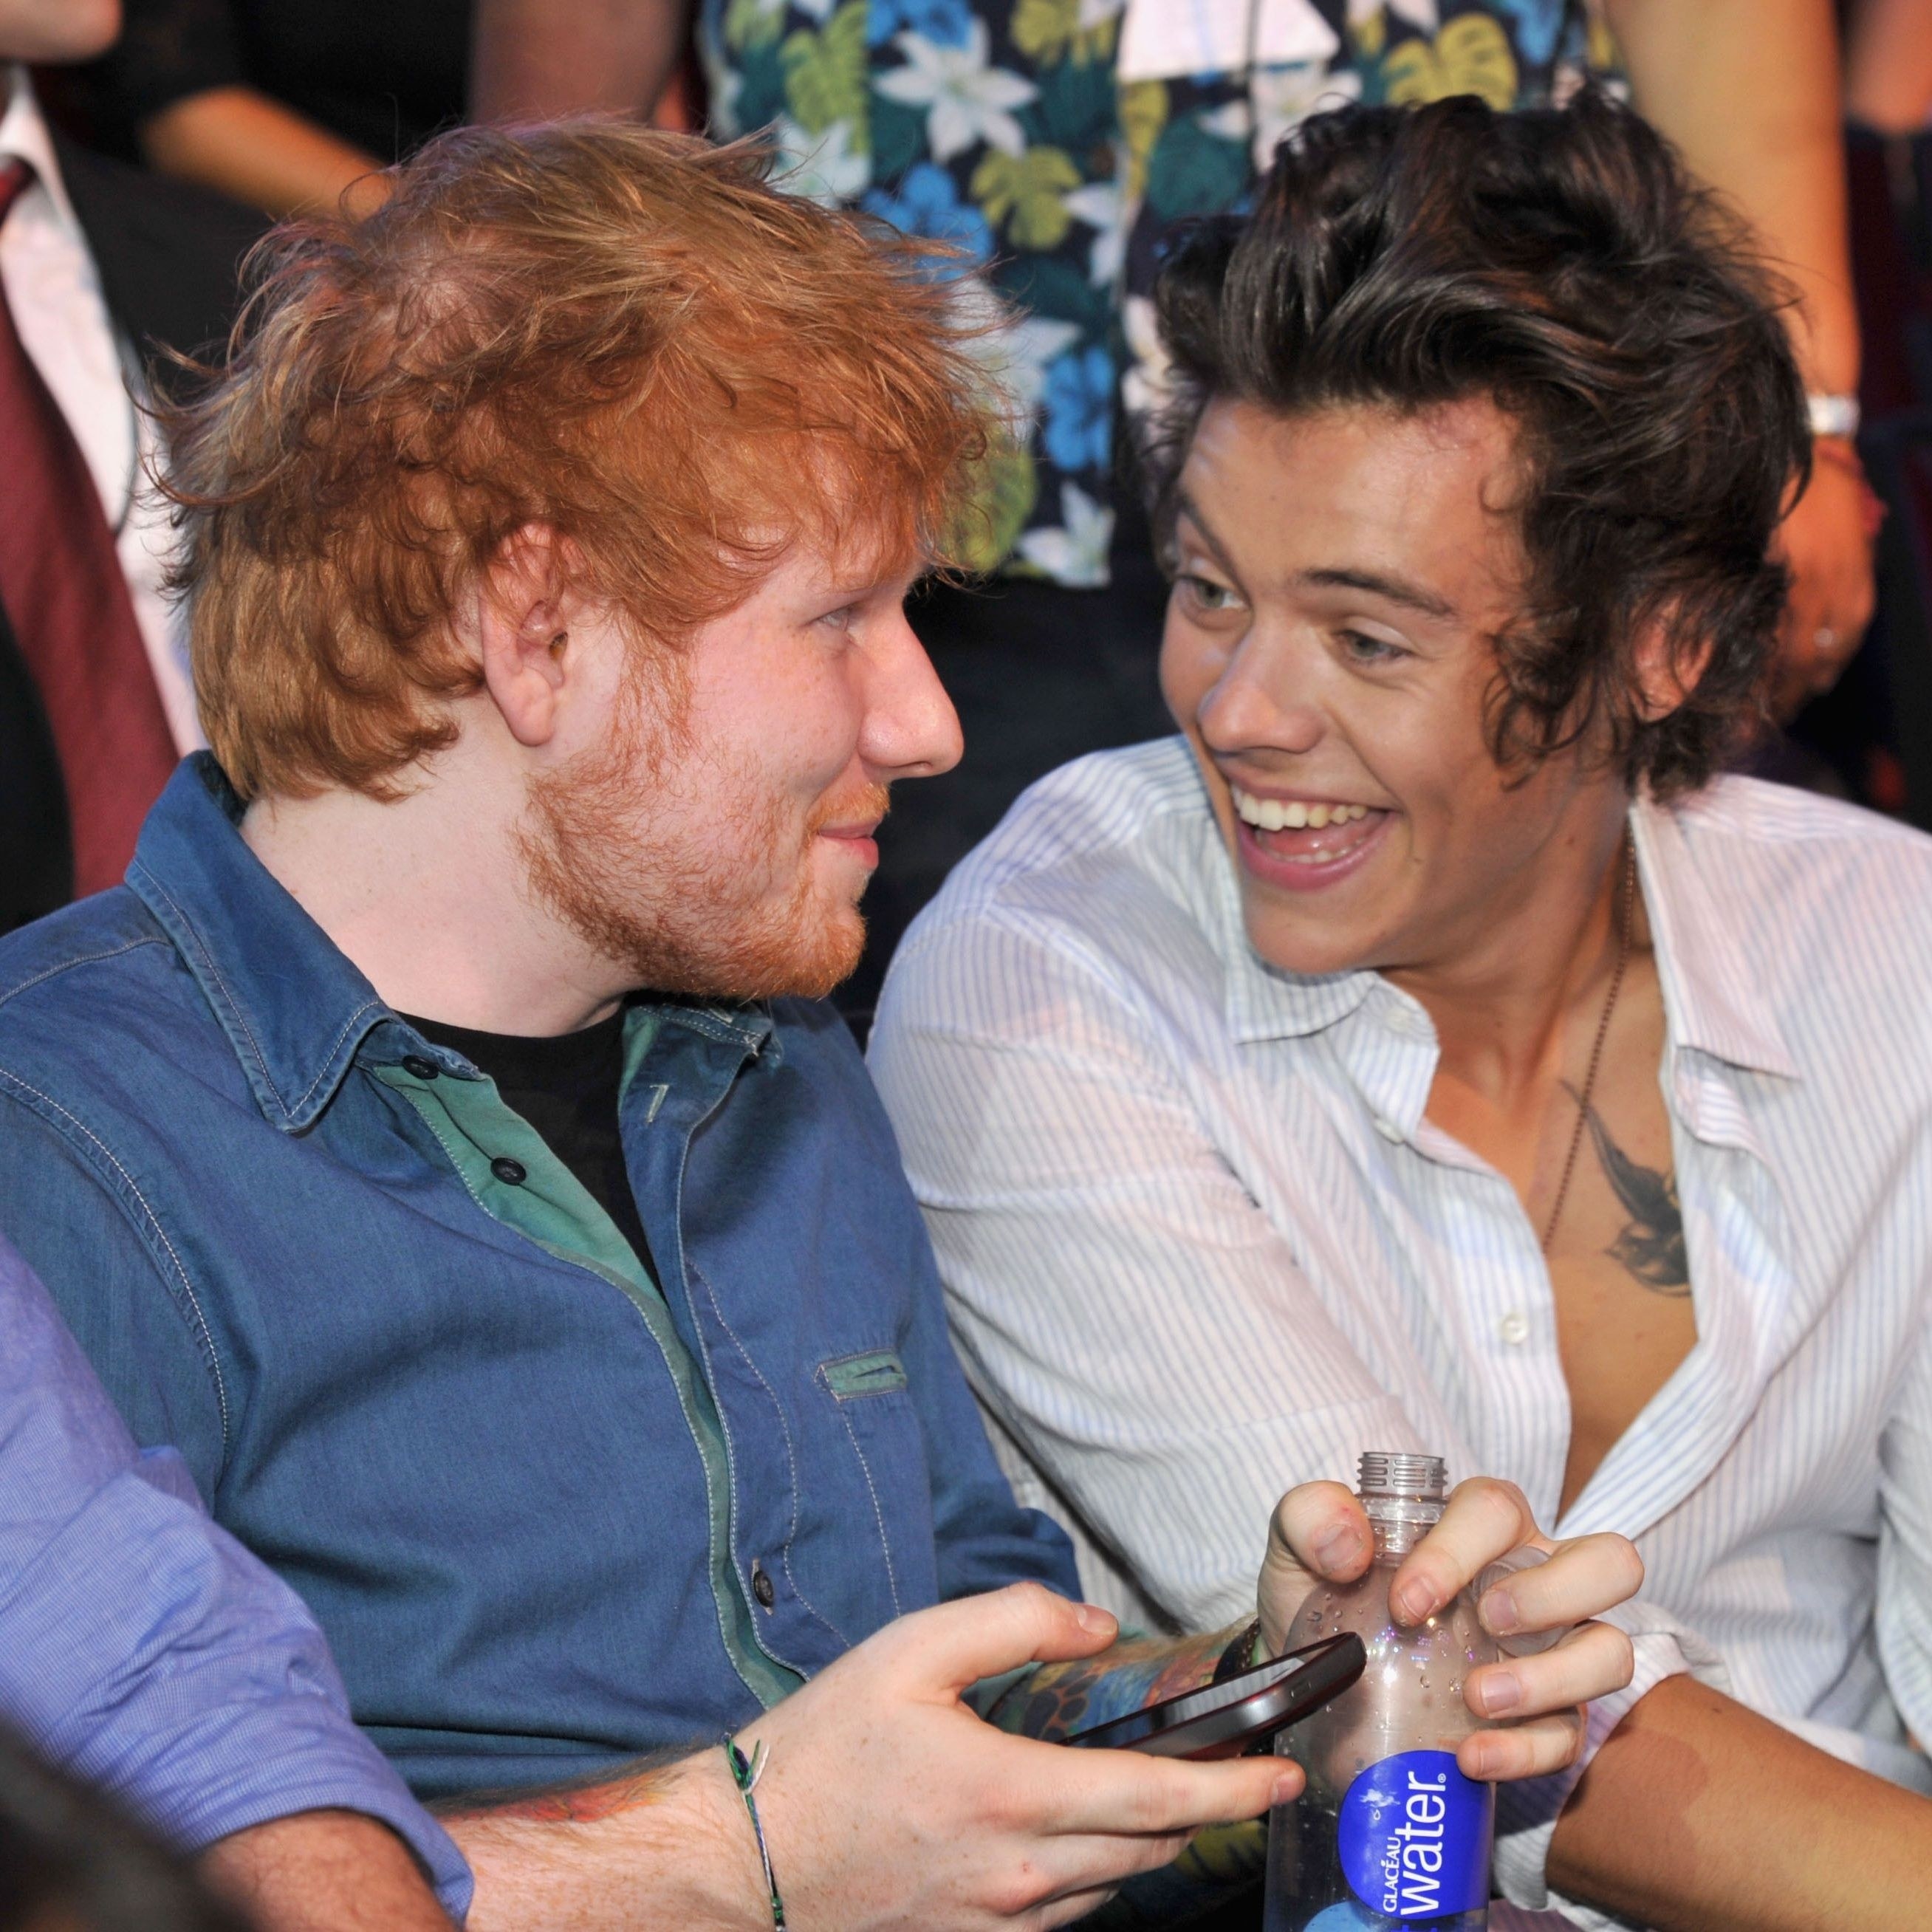 Harry laughing at Ed Sheeran.